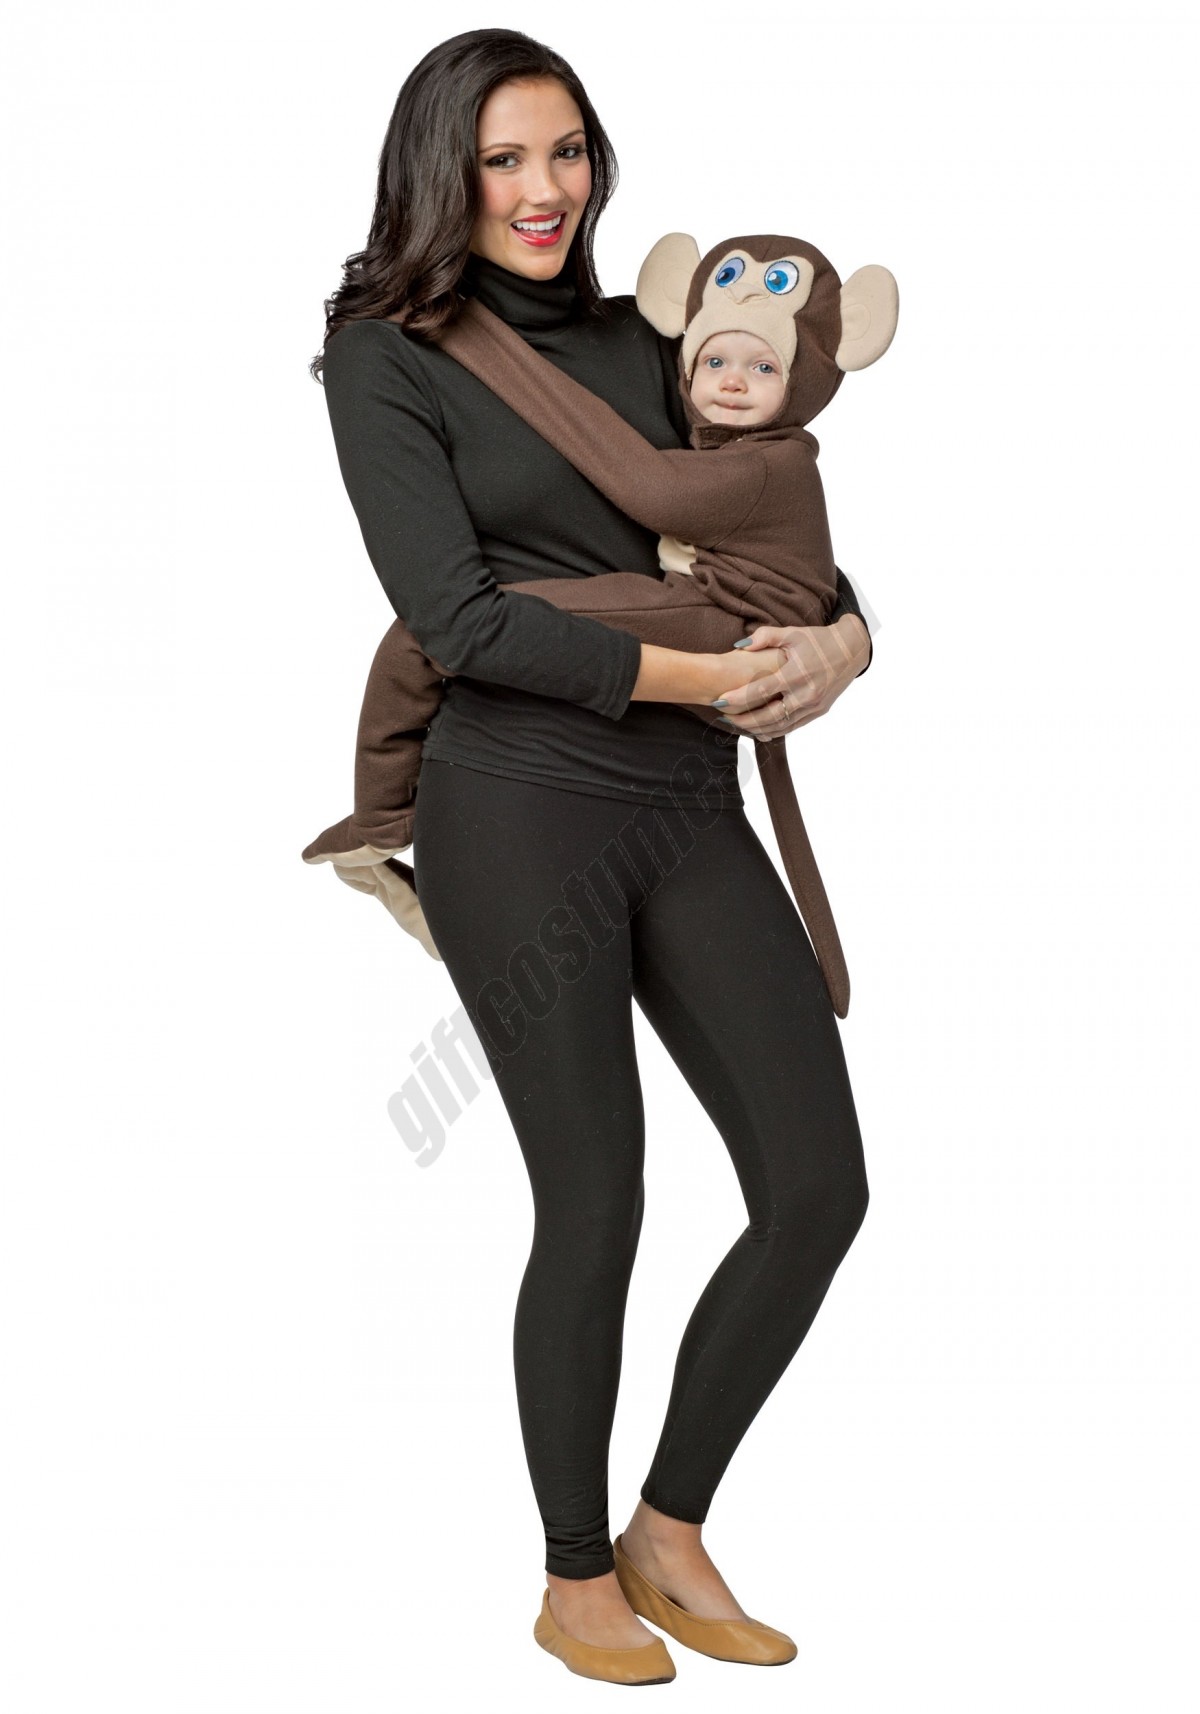 Huggables Monkey Infant Costume Promotions - -0